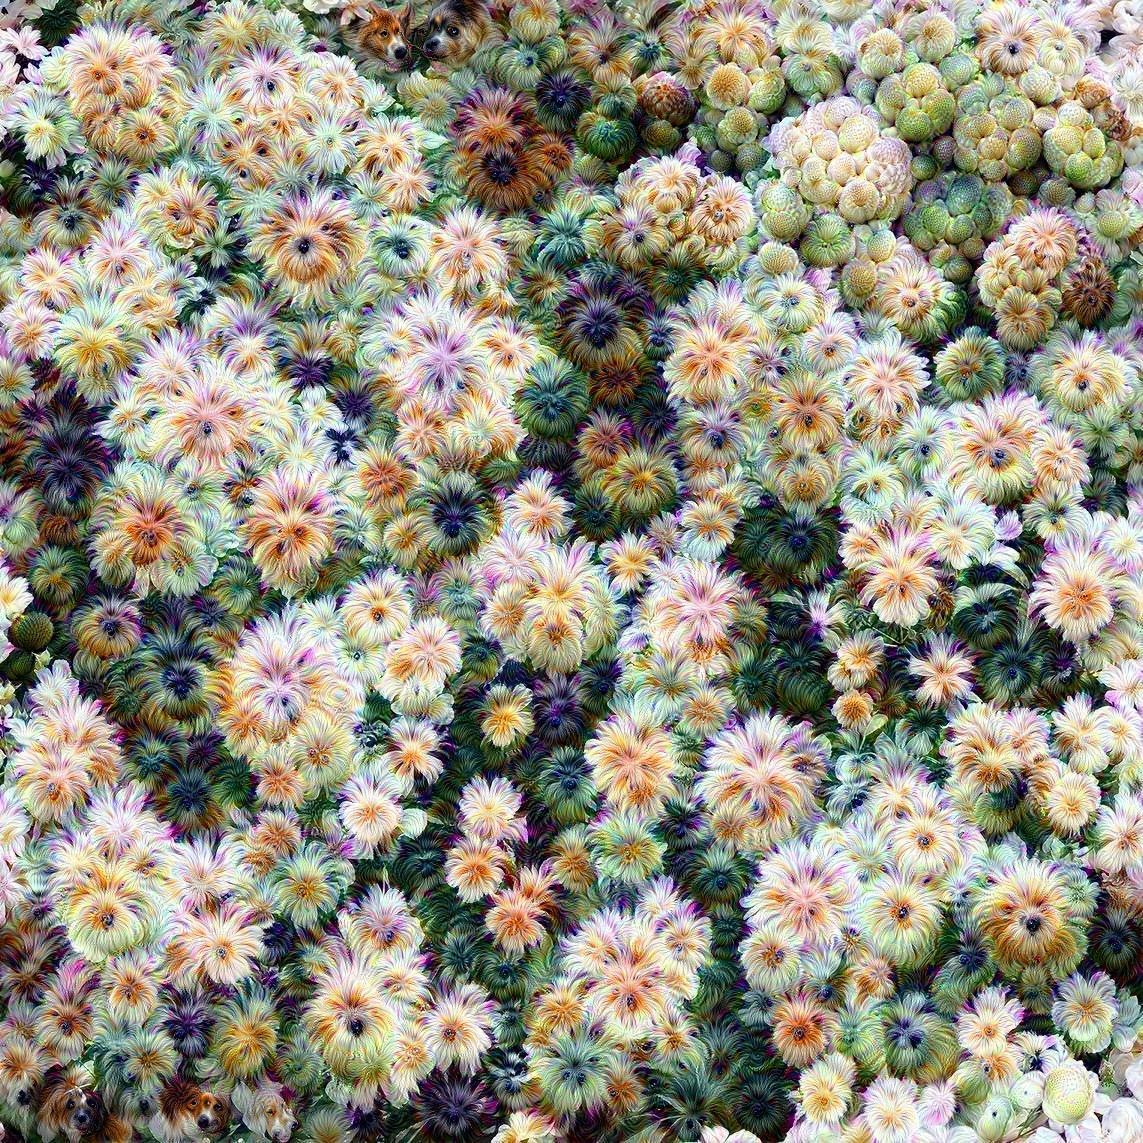 Flower Puffs